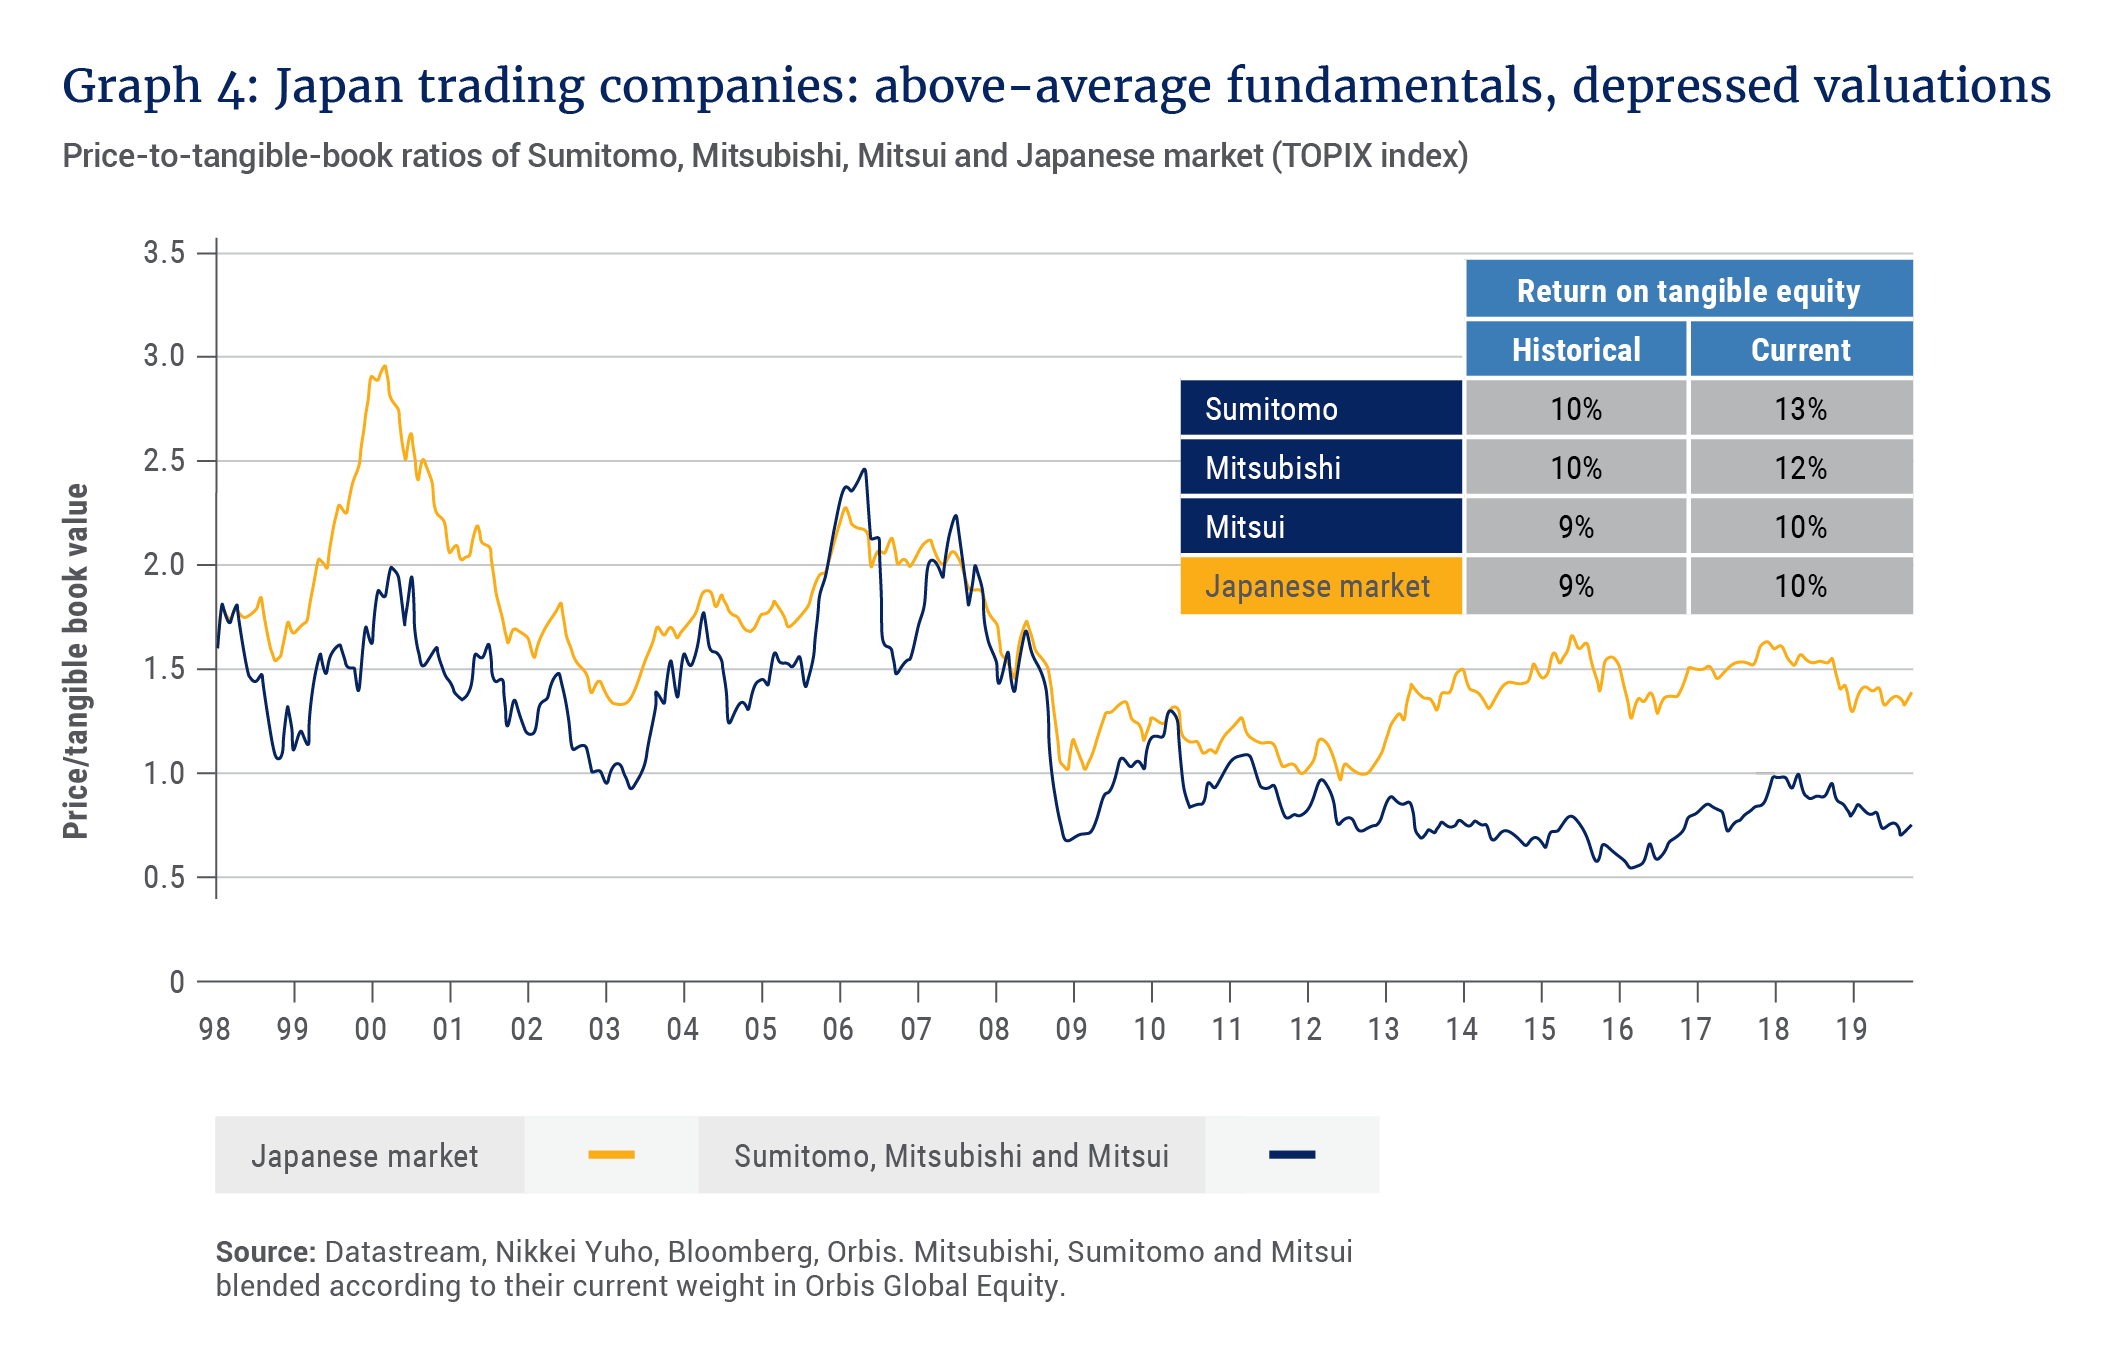 Japan trading companies: above-average fundamentals, depressed valuations - Allan Gray